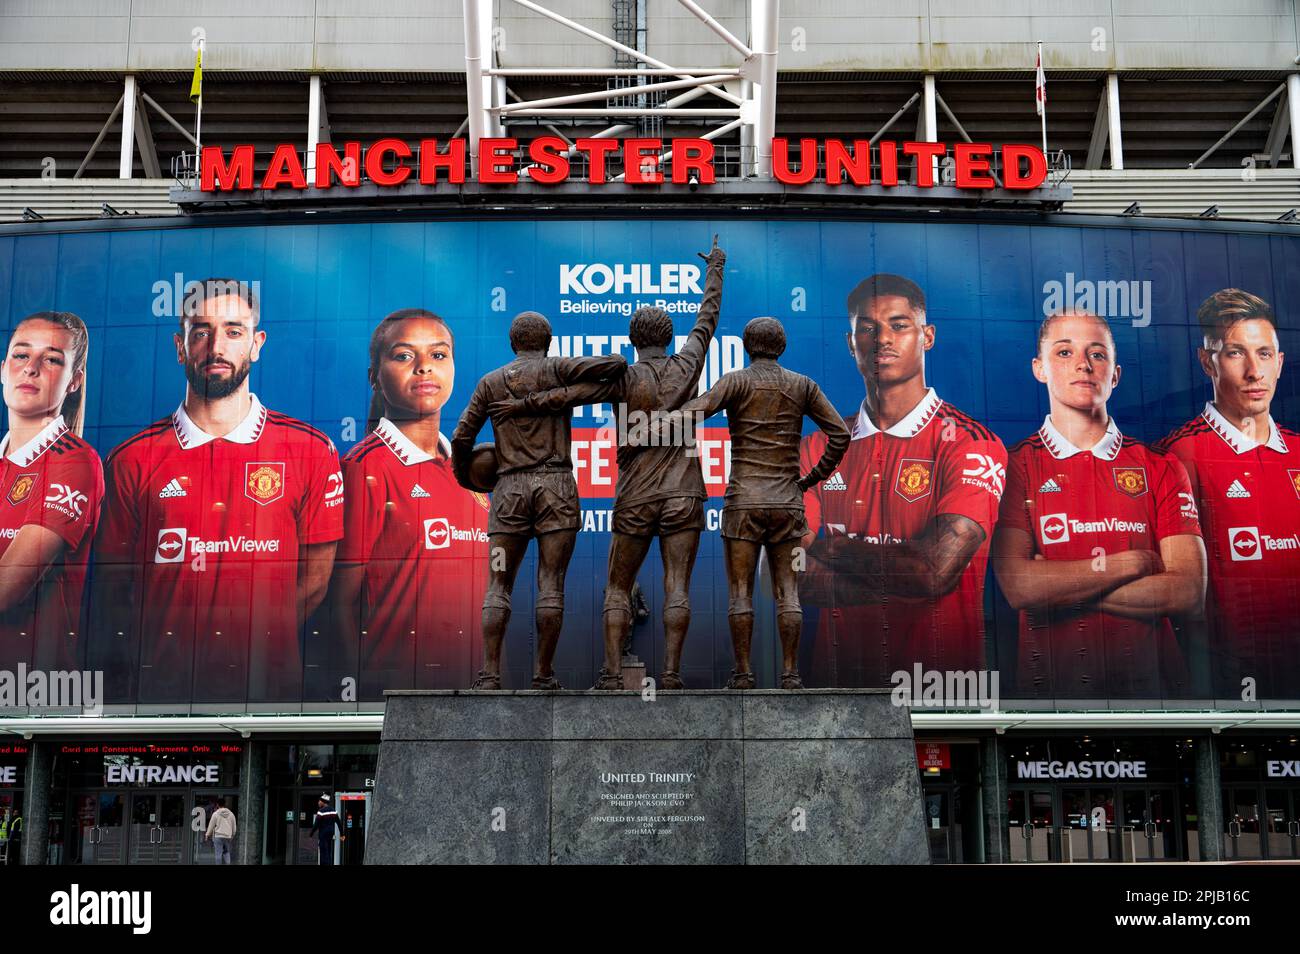 Manchester United Football Club Stockfoto